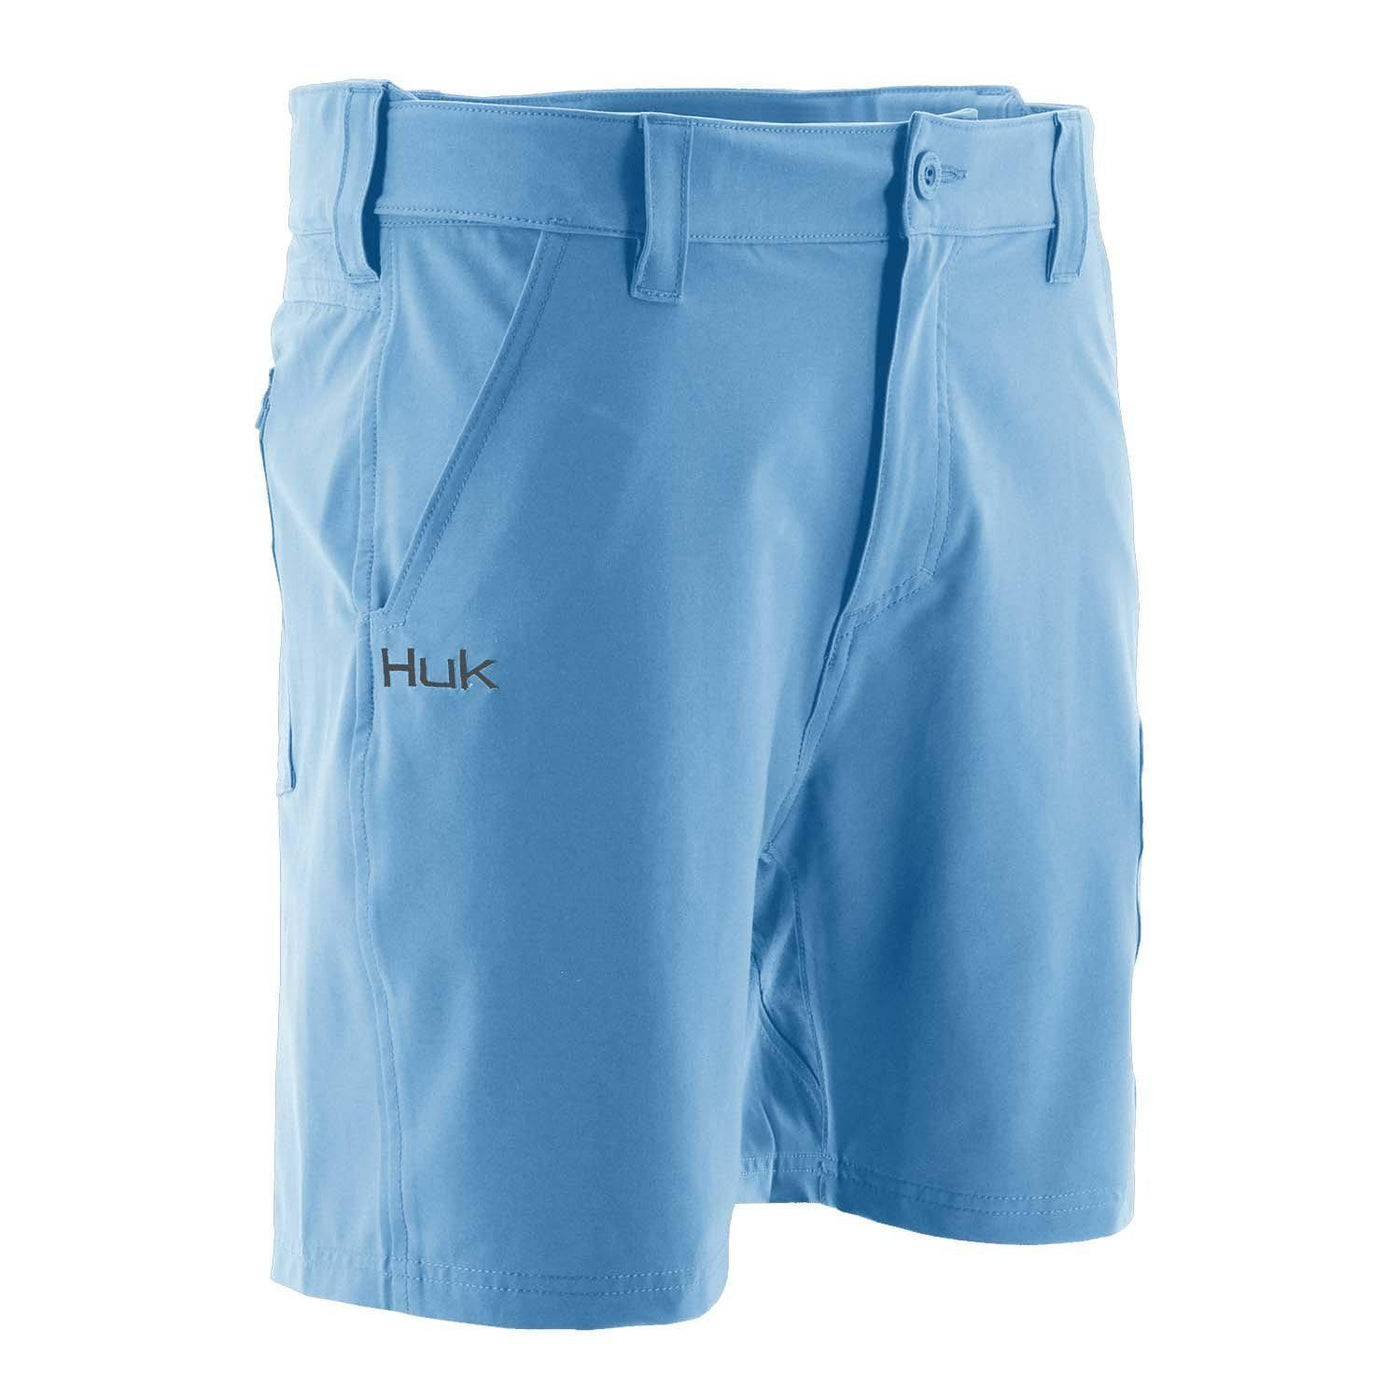 Huk Men's Next Level 7 Short - Khaki - XL